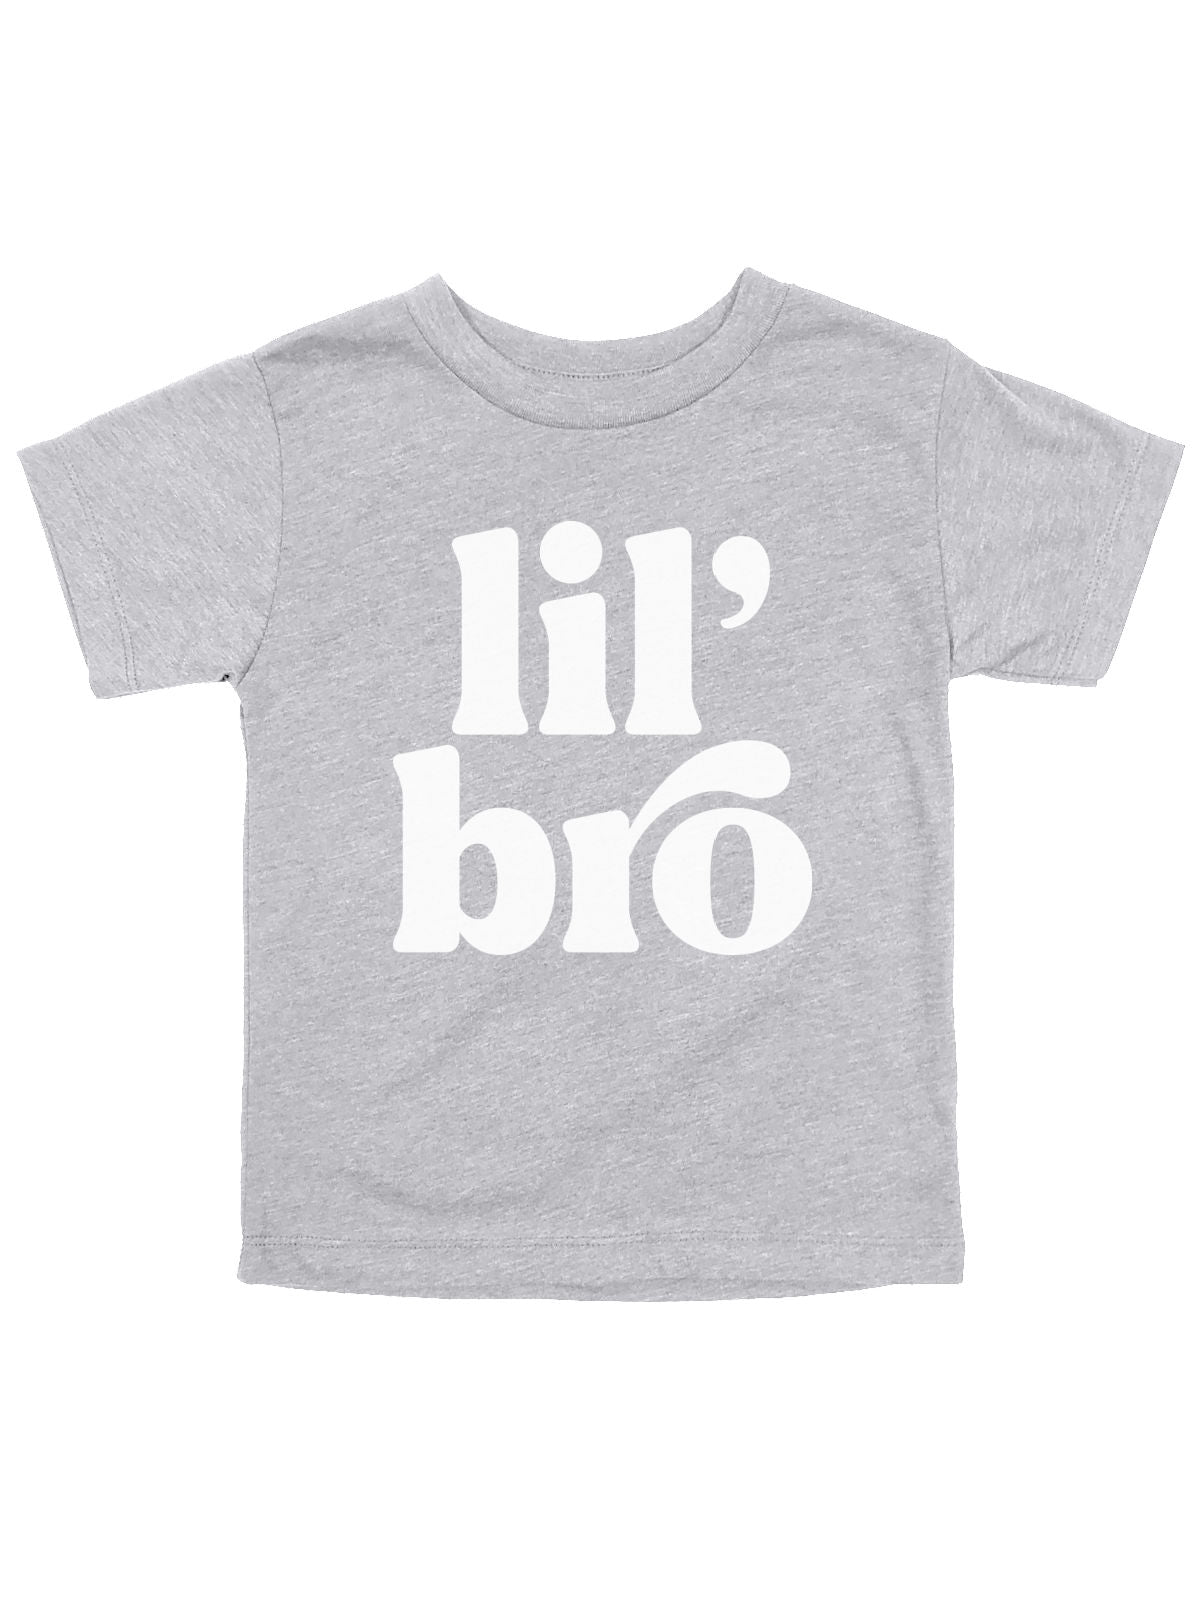 Lil Bro Baby Boy Shirt in Heather Gray